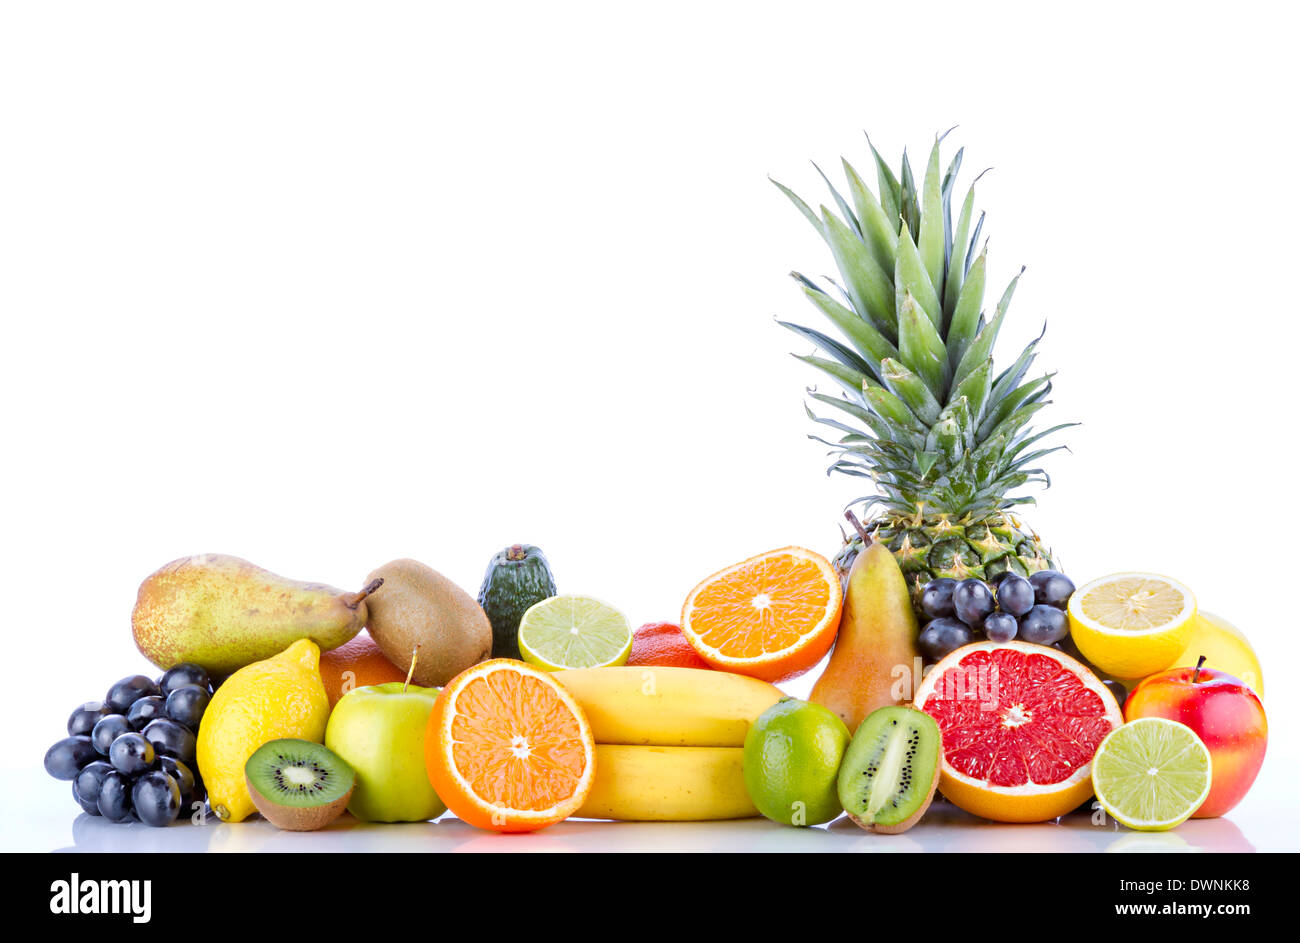 Assortment of exotic fruits on white background Stock Photo